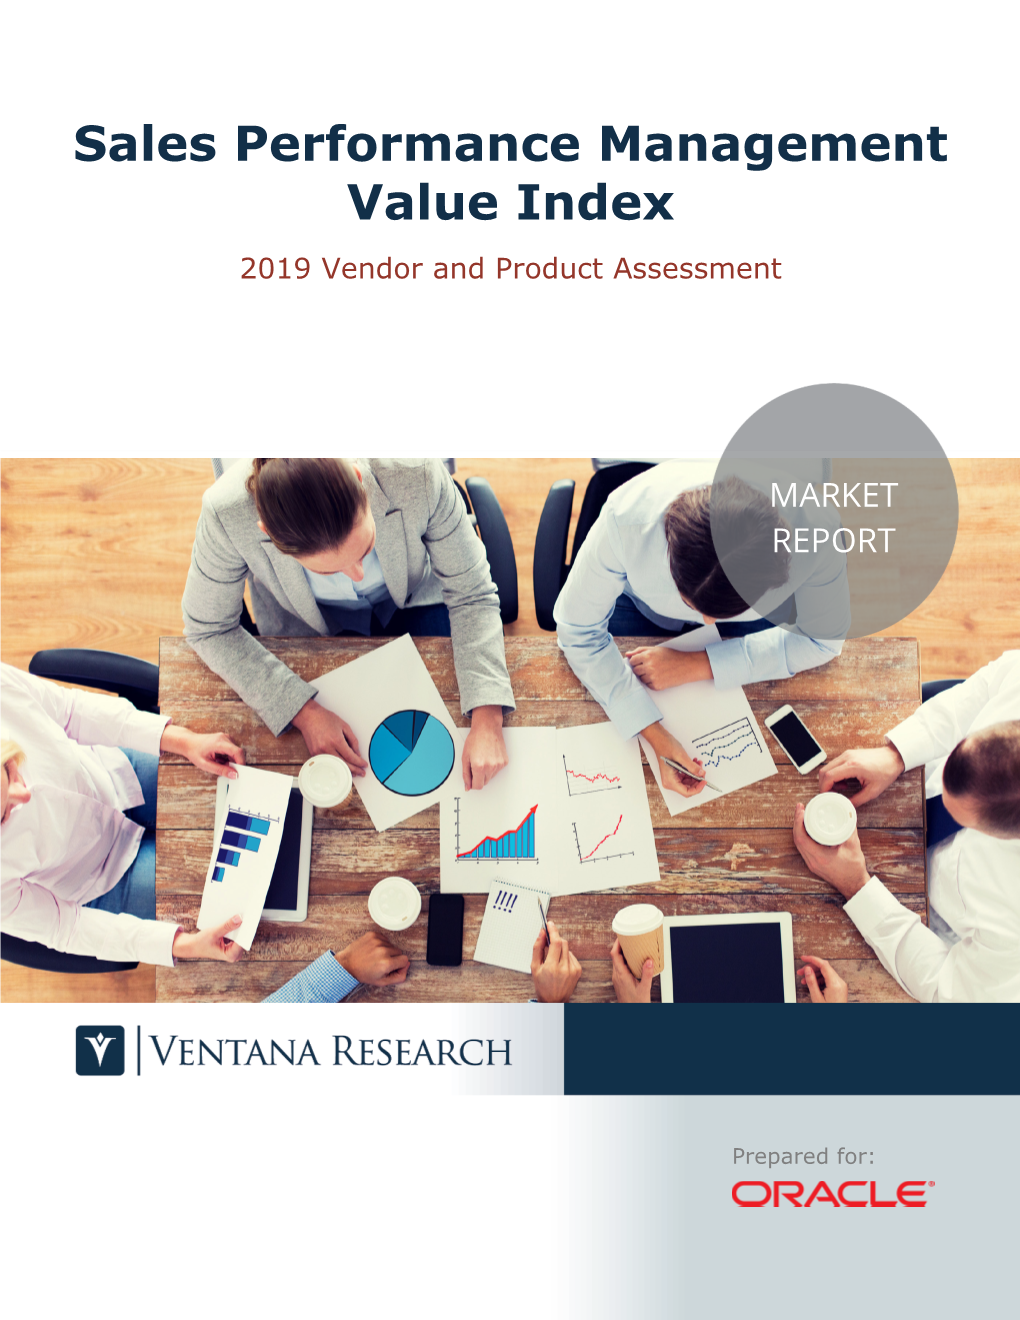 Ventana Research Value Index Sales Performance Management